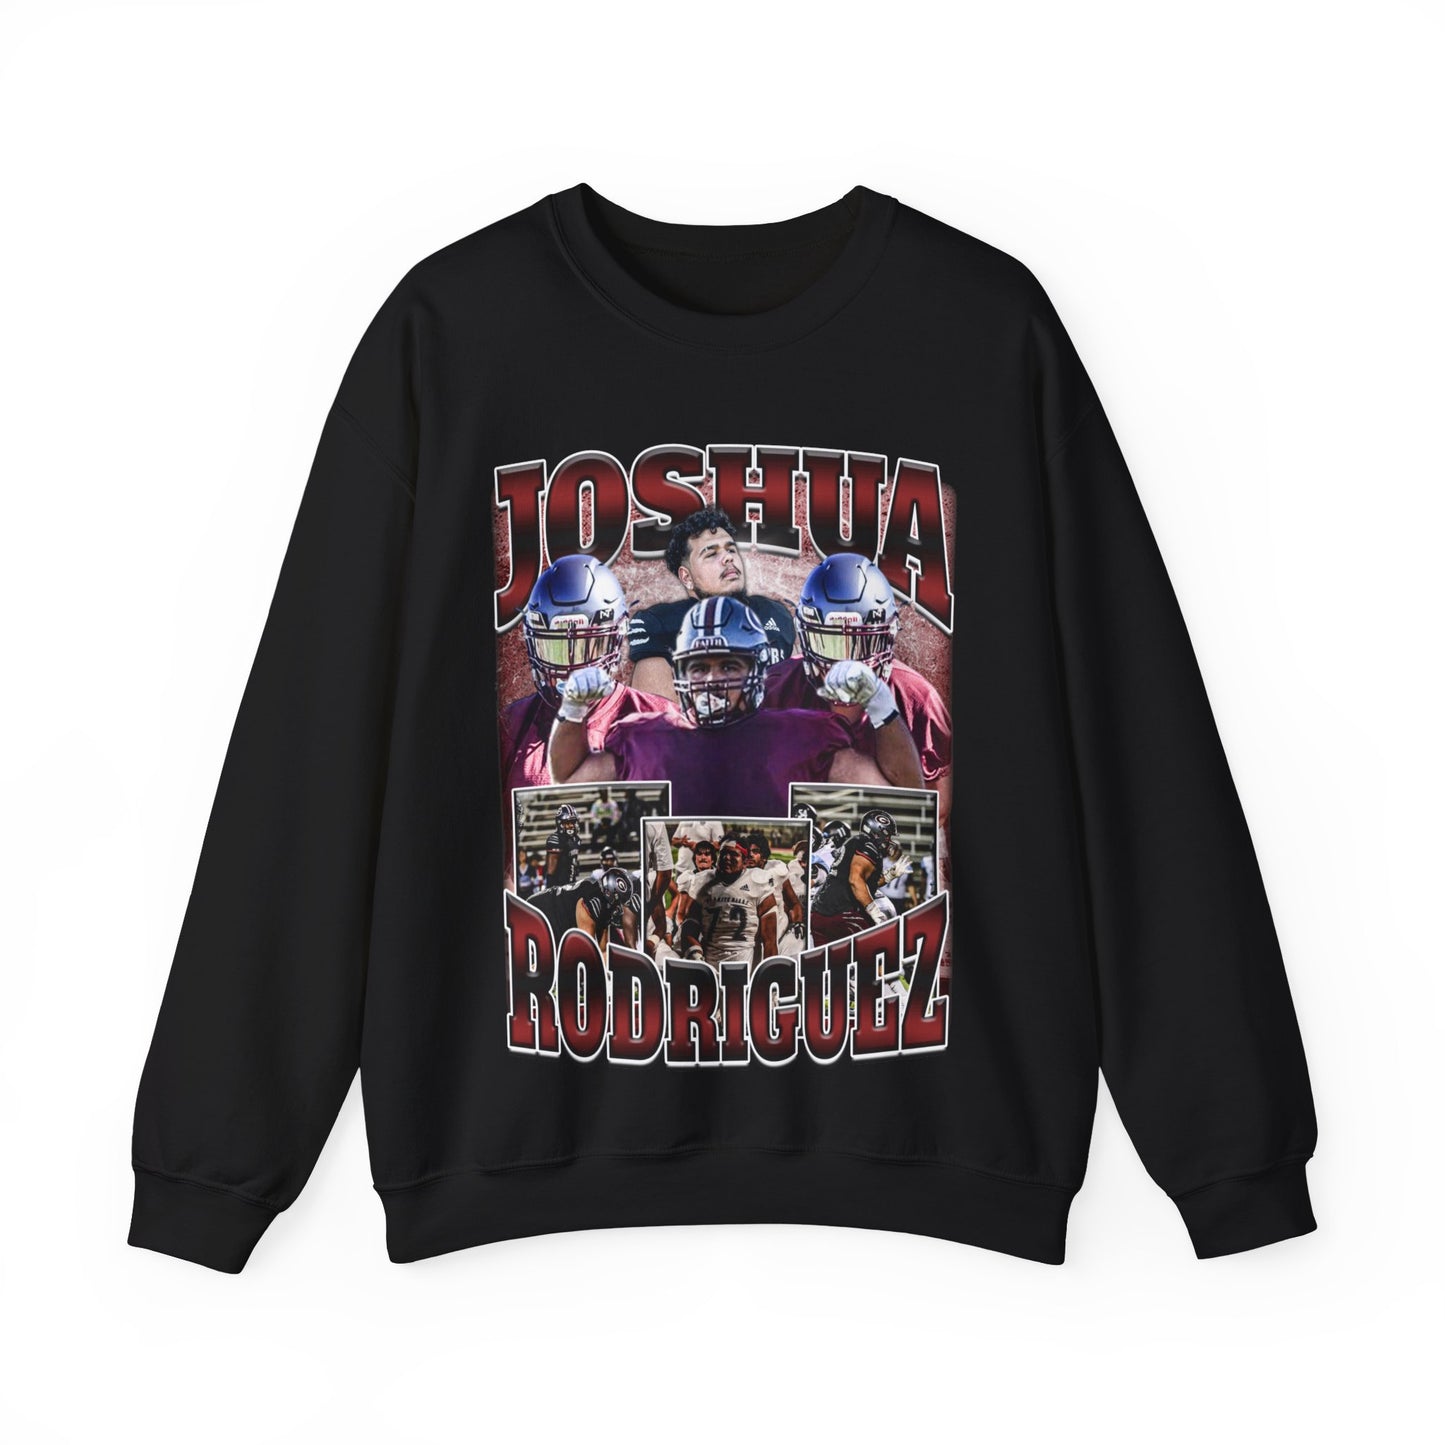 Joshua Rodriguez Crewneck Sweatshirt